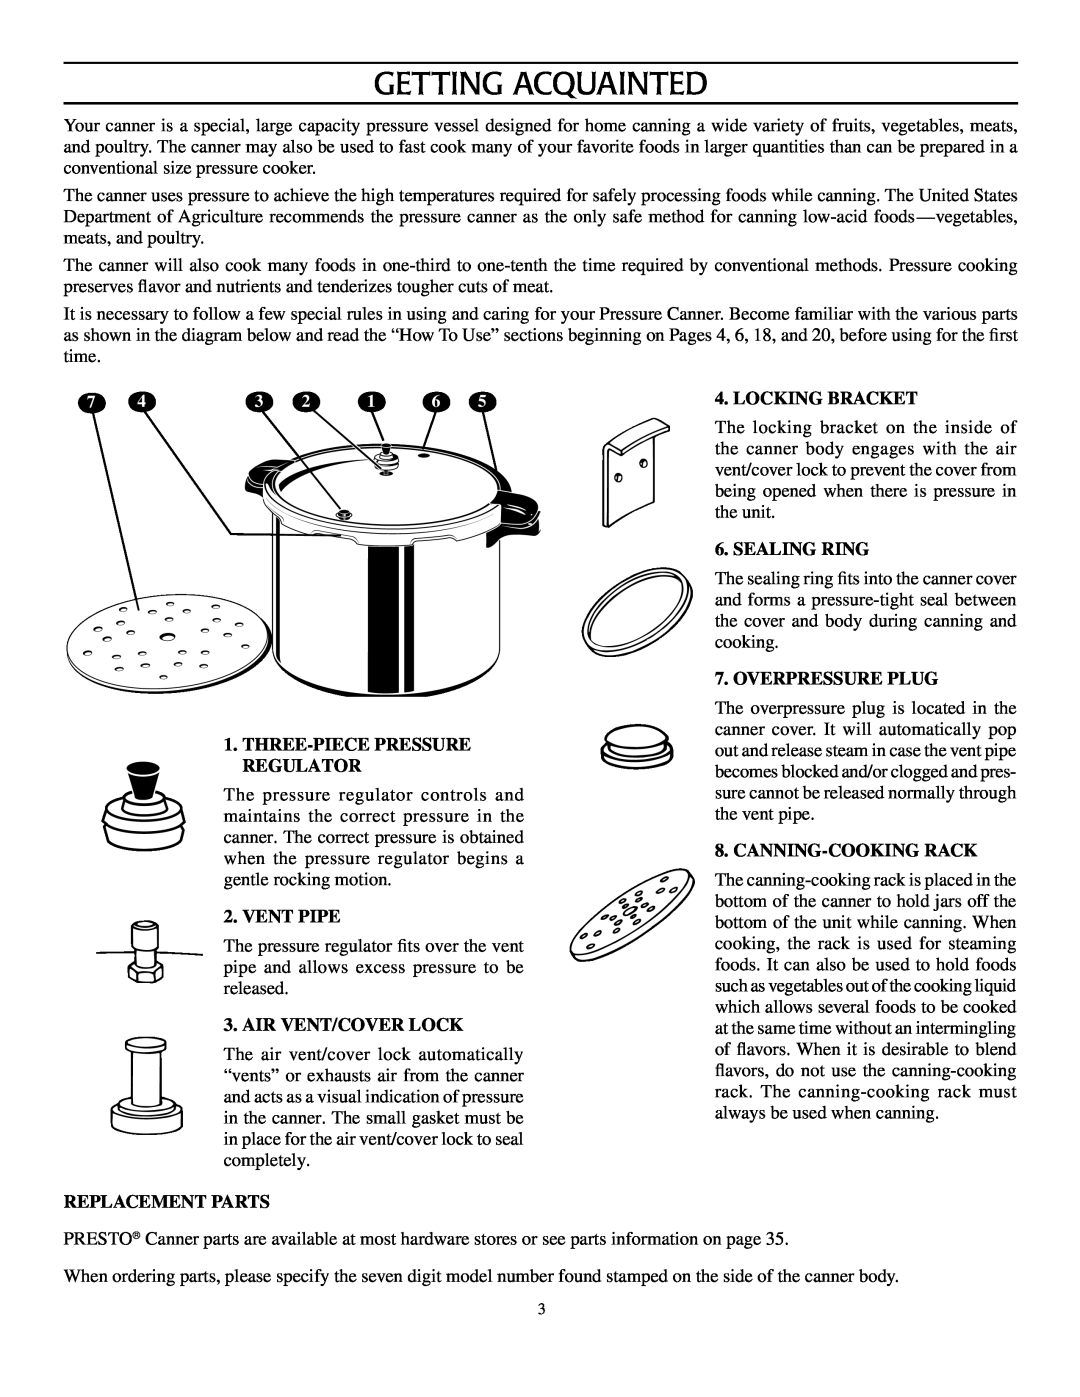 Presto Pressure Canner and Cooker Getting Acquainted, Three-Piece Pressure Regulator, Vent Pipe, Air Vent/Cover Lock 